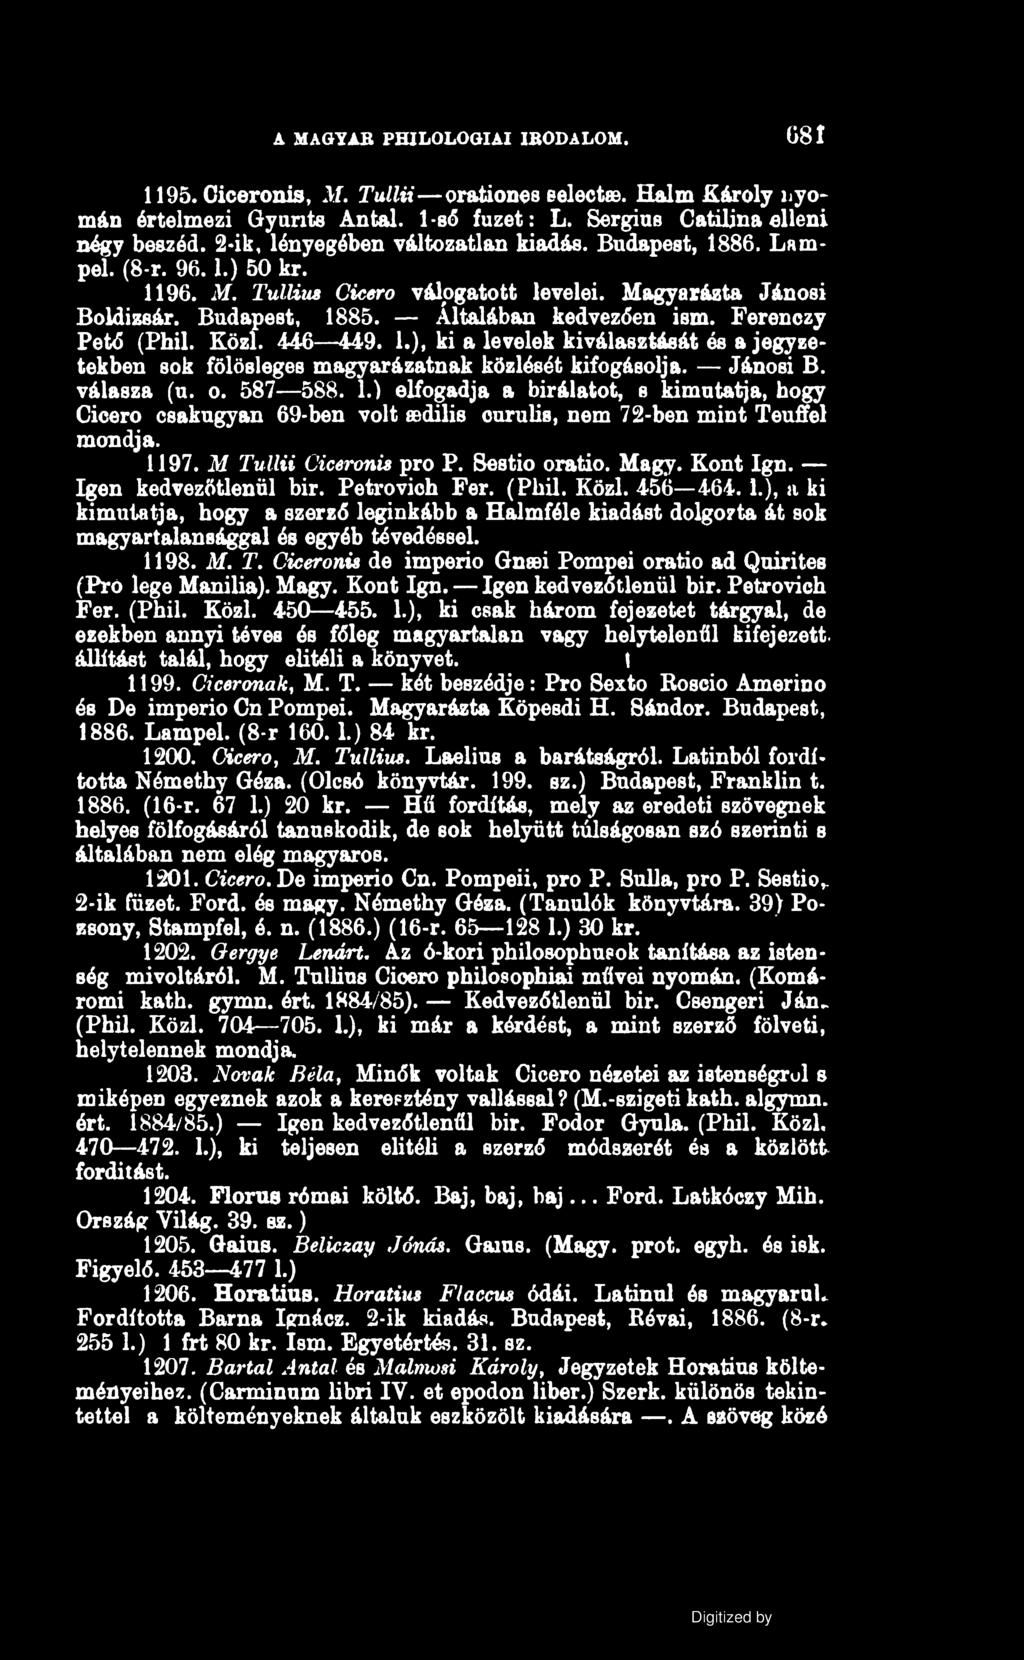 A MAGYAR PHILOLOÖIAI IRODALOM 1886-BAN. - PDF Free Download